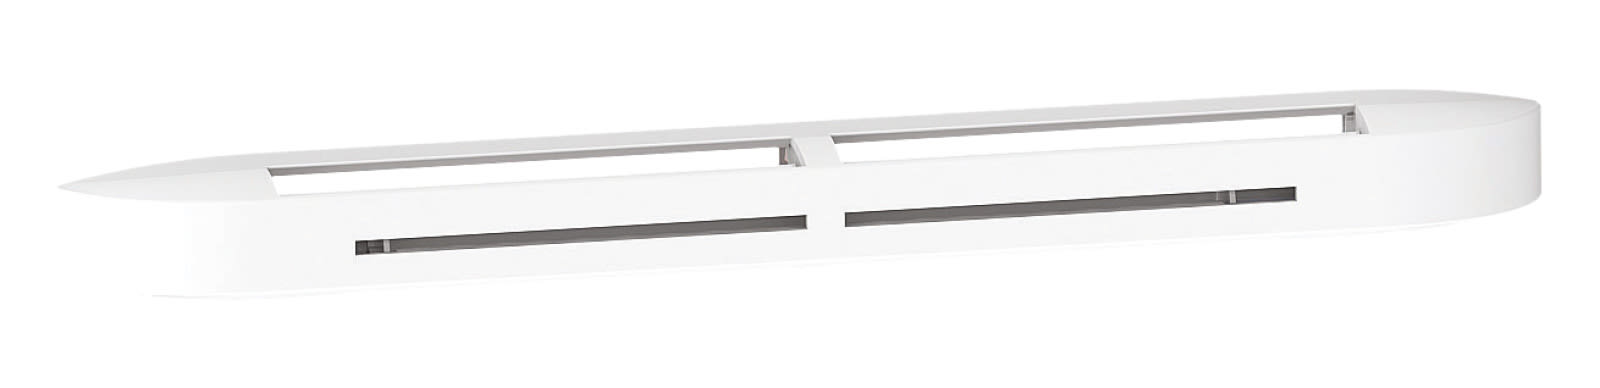 Atlantic Clim & Ventil - Entree d'air hygro compacte 5-45 + grille facade attenuation 34dB blanc